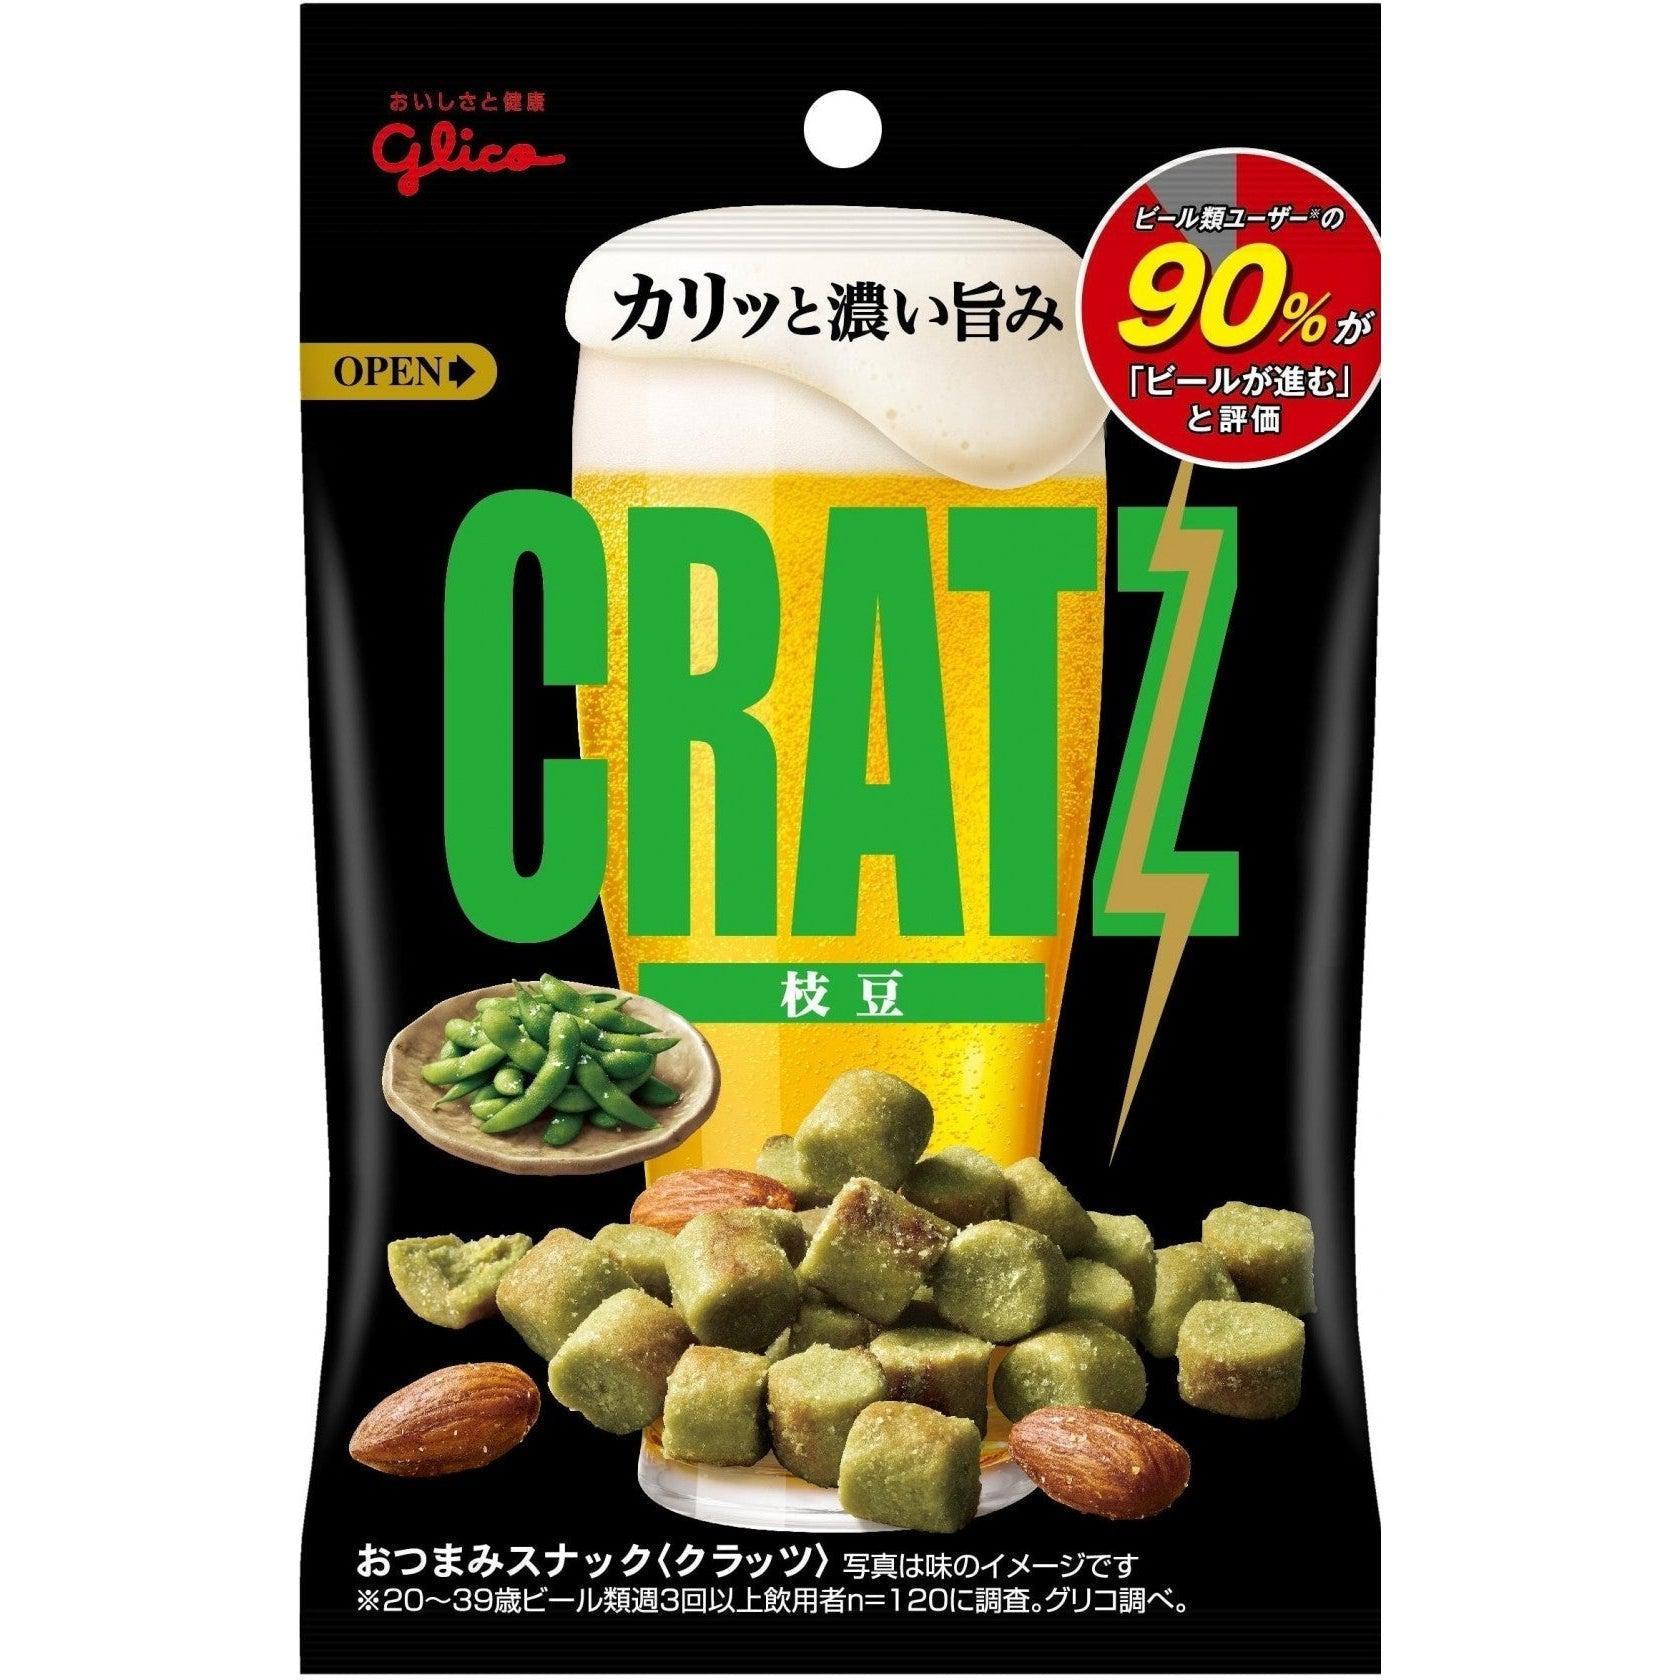 Glico Cratz Edamame Snack 42g, Japanese Taste